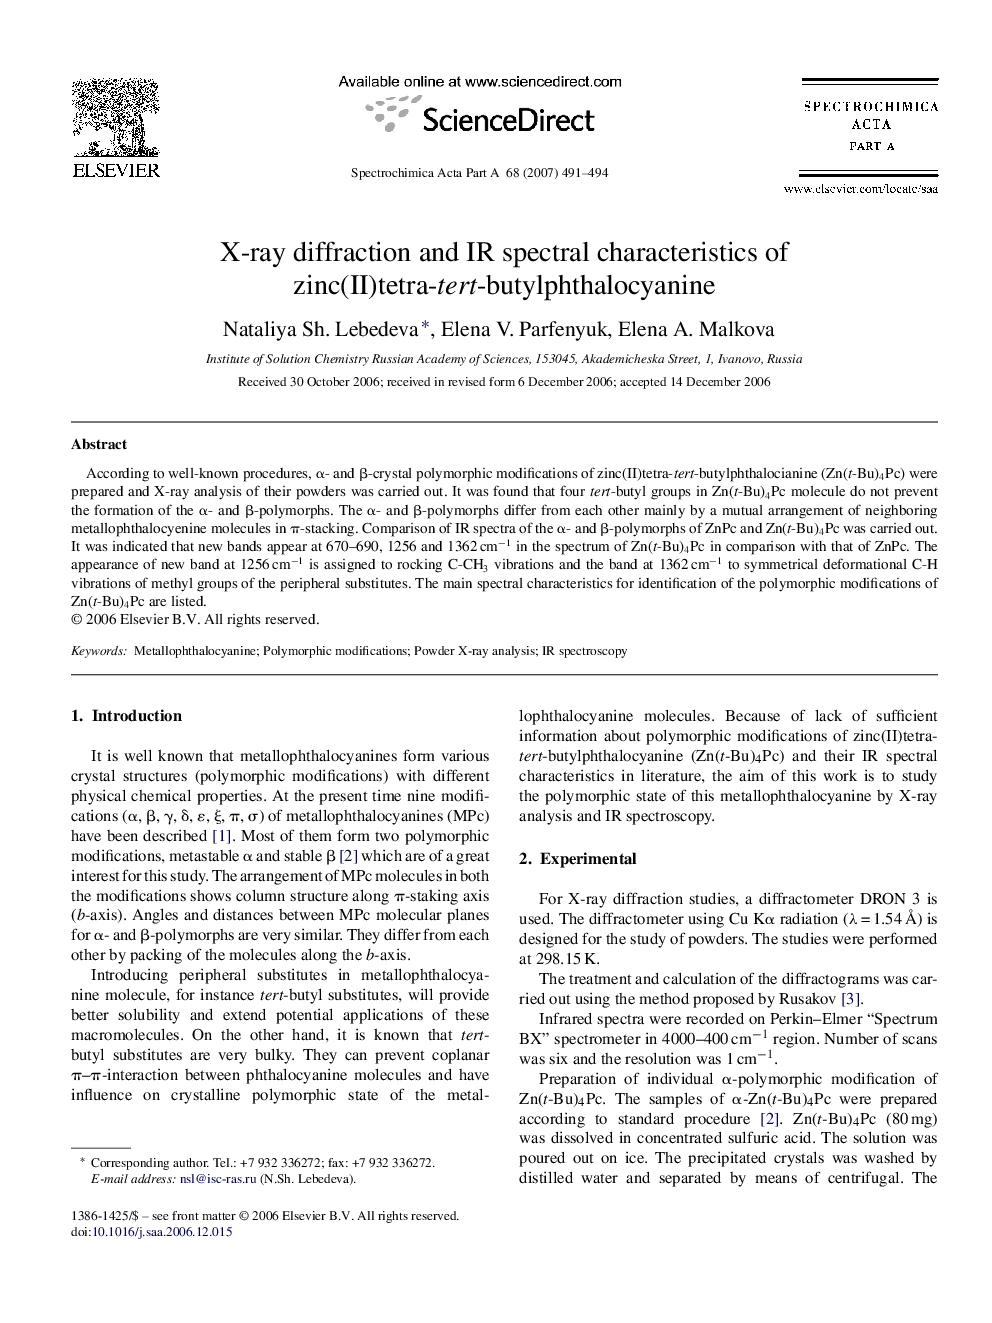 X-ray diffraction and IR spectral characteristics of zinc(II)tetra-tert-butylphthalocyanine